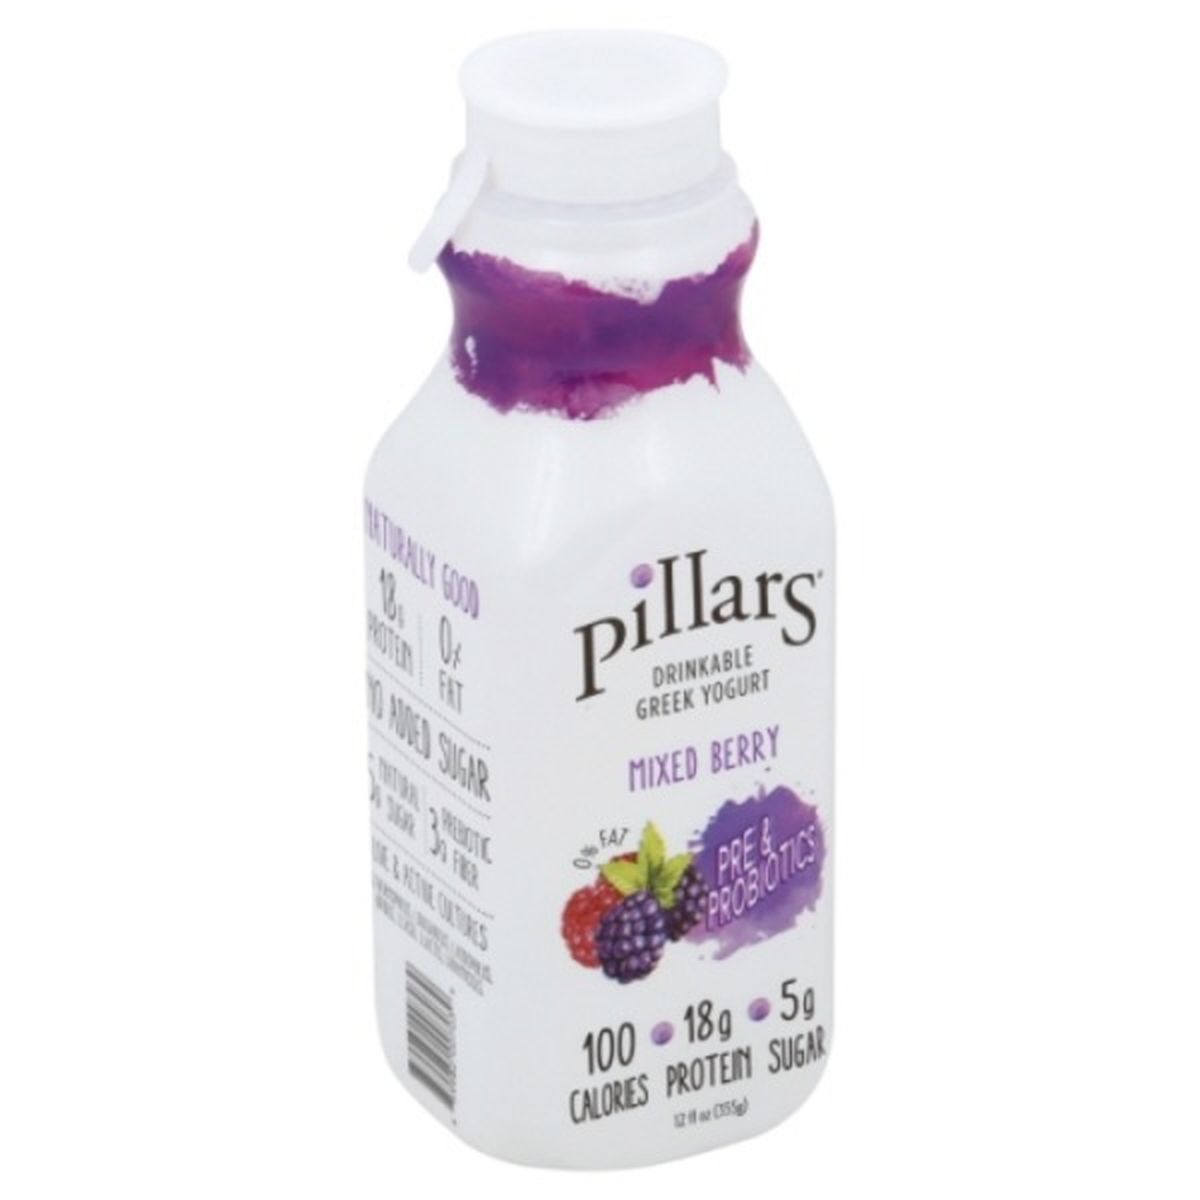 Calories in Pillars Greek Yogurt, Drinkable, 0% Fat, Mixed Berry